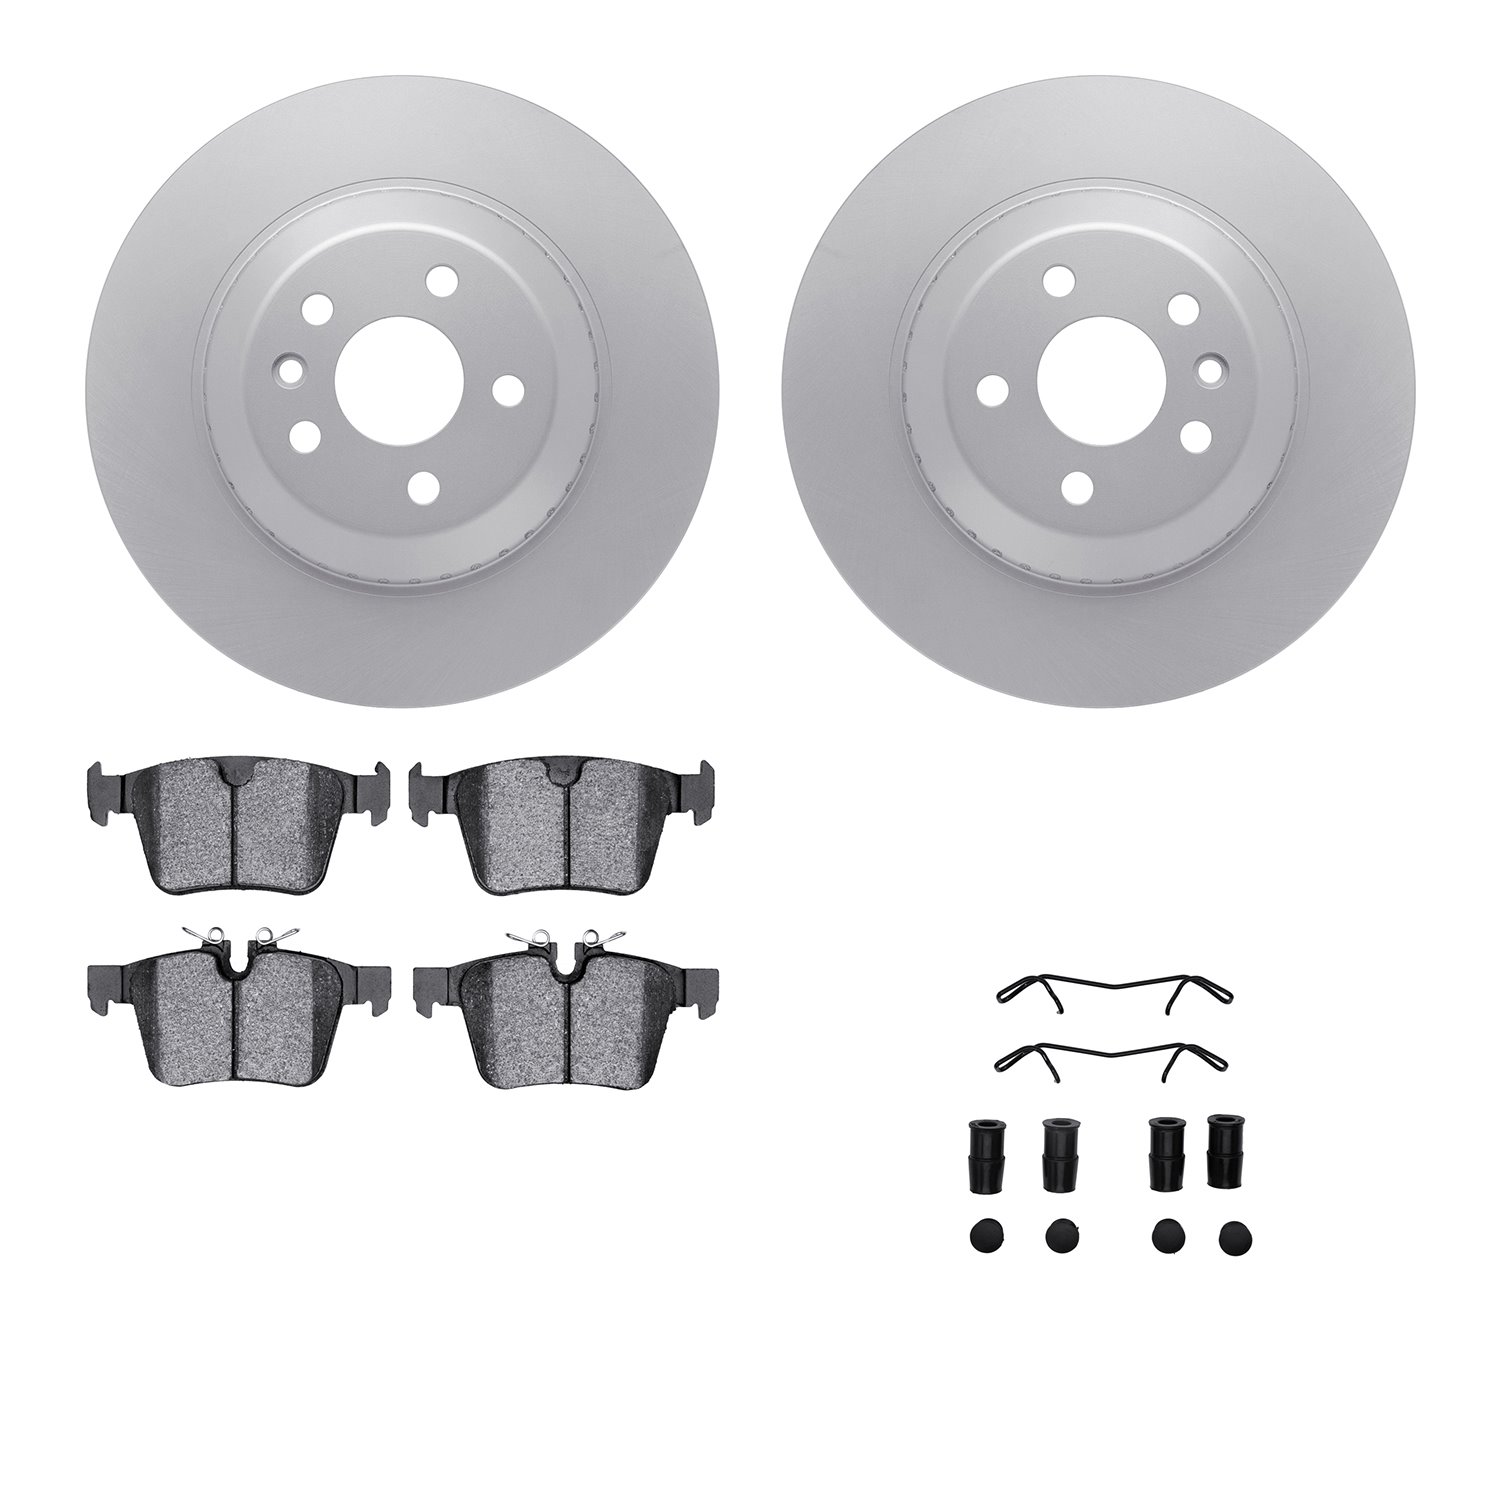 4612-11031 Geospec Brake Rotors w/5000 Euro Ceramic Brake Pads & Hardware, Fits Select Multiple Makes/Models, Position: Rear